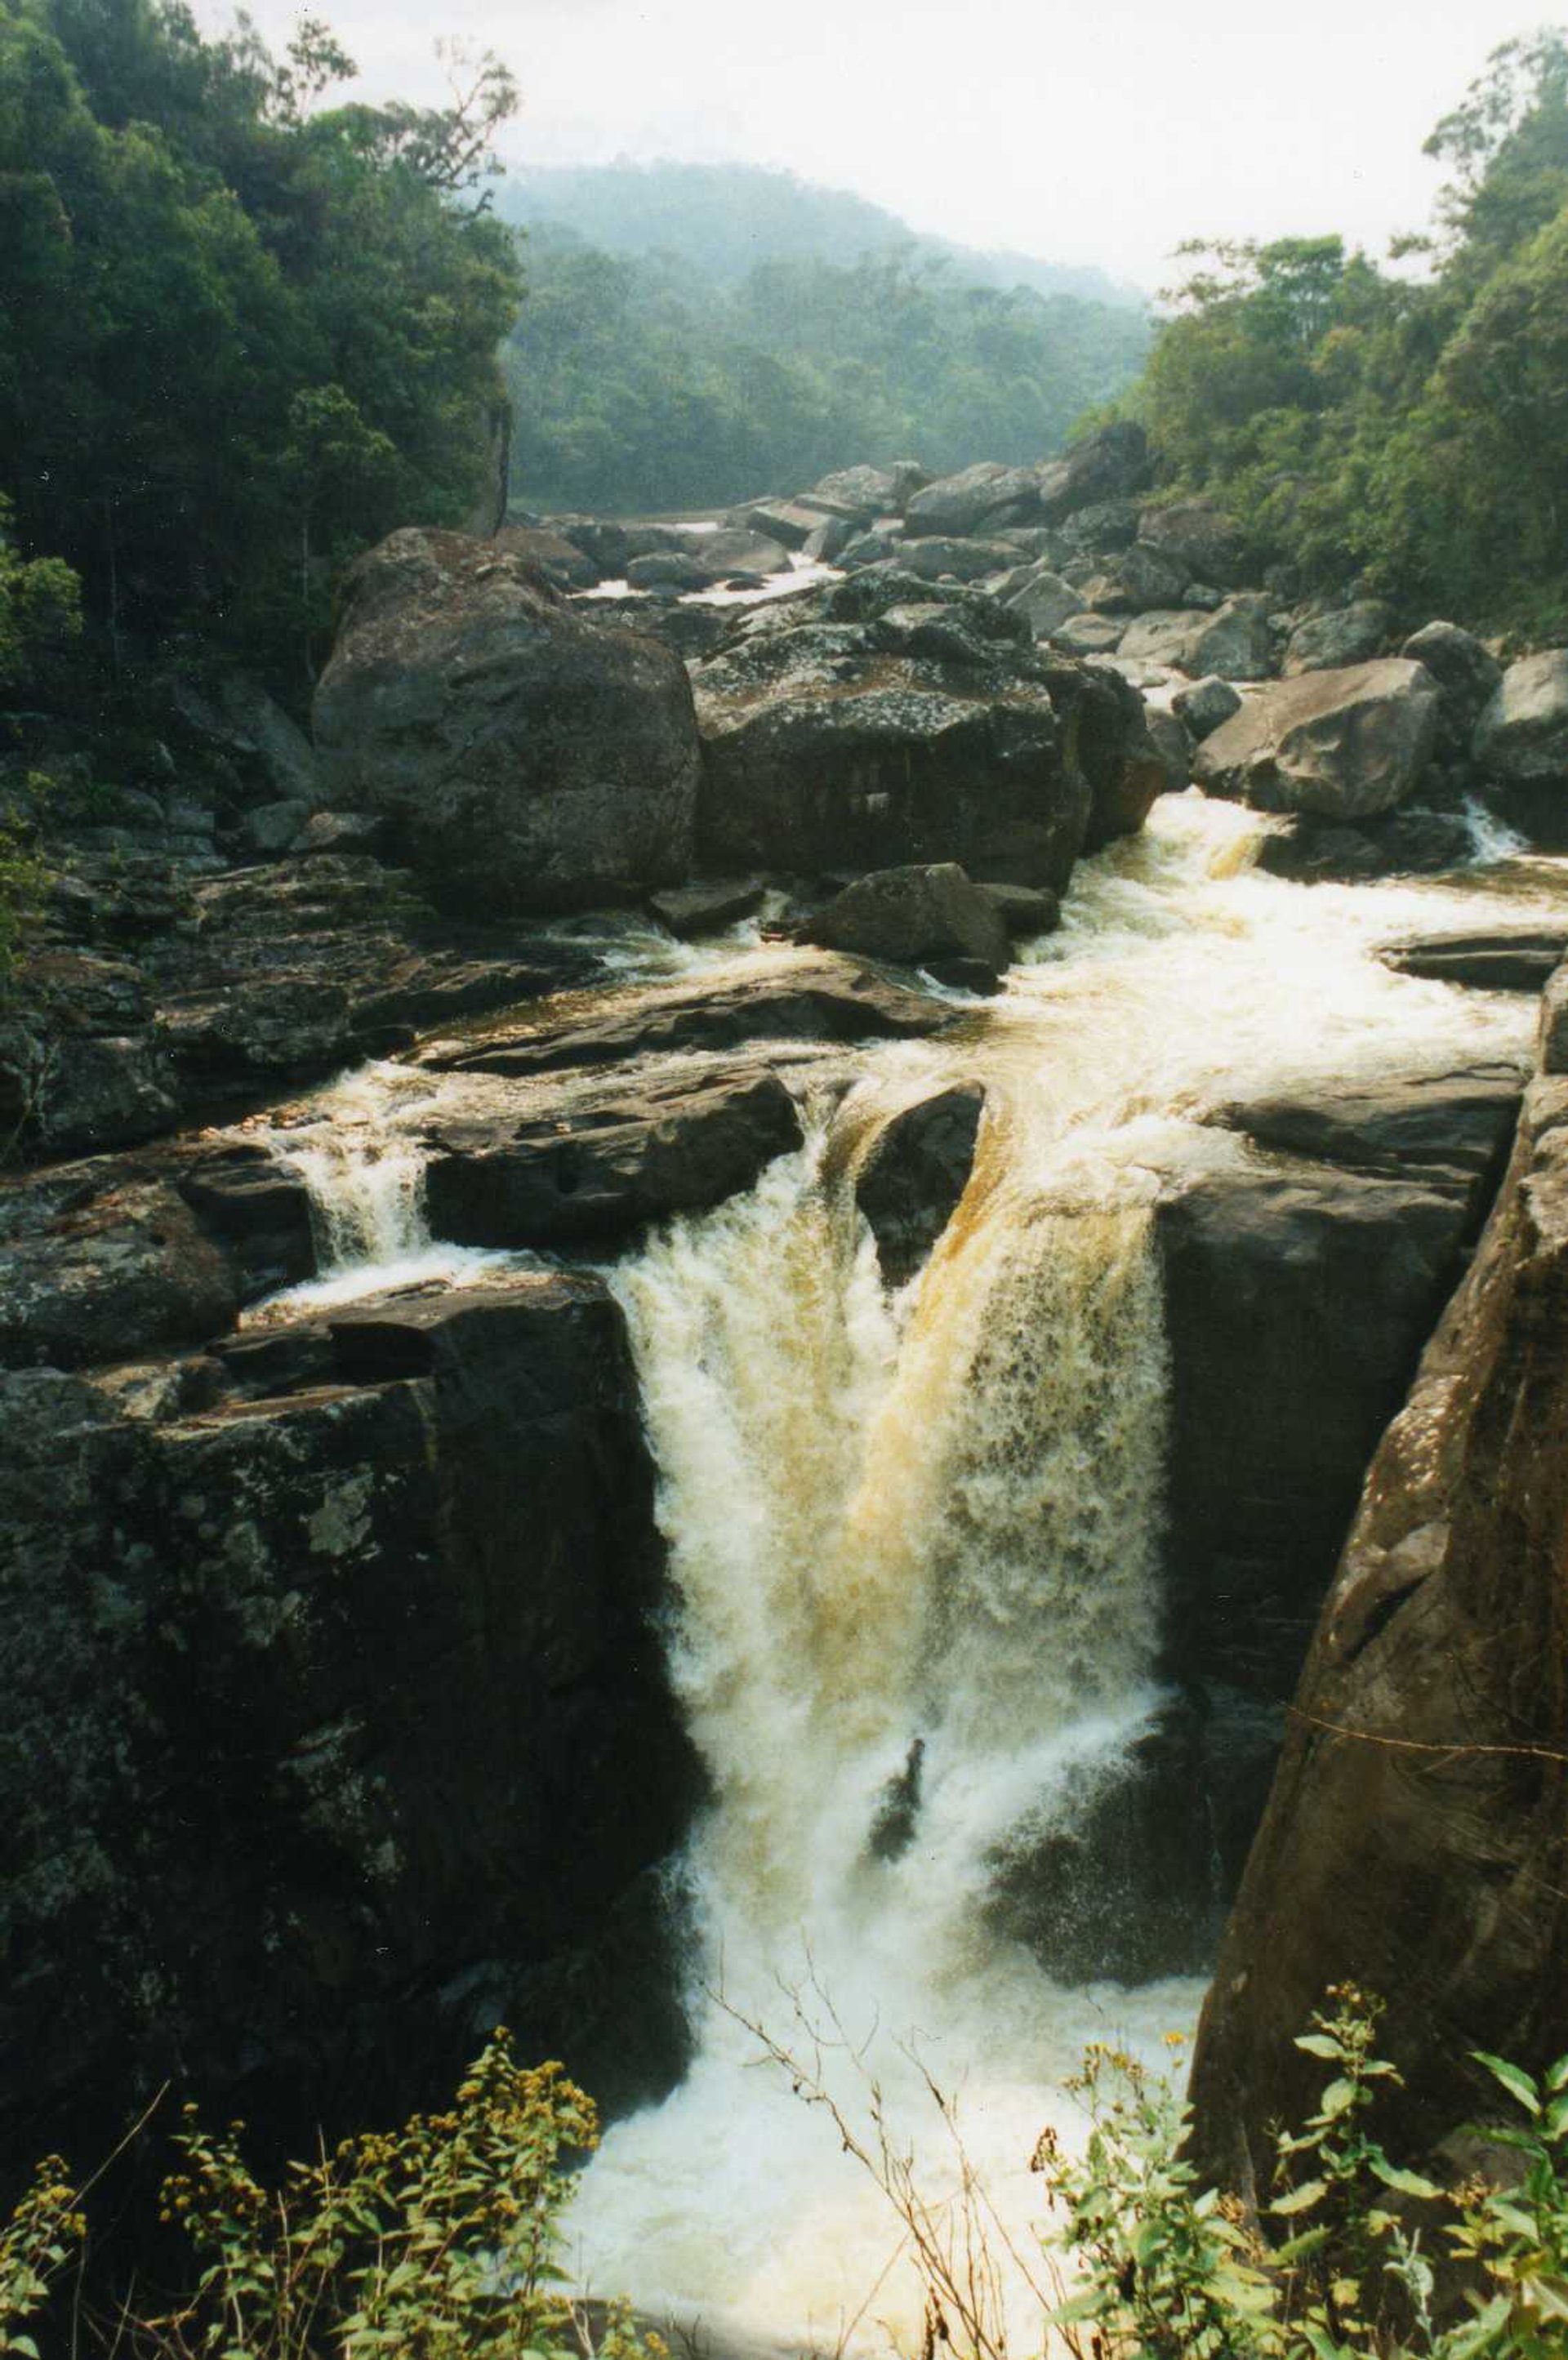 Hot Springs and Waterfalls of Ranomafana National Park